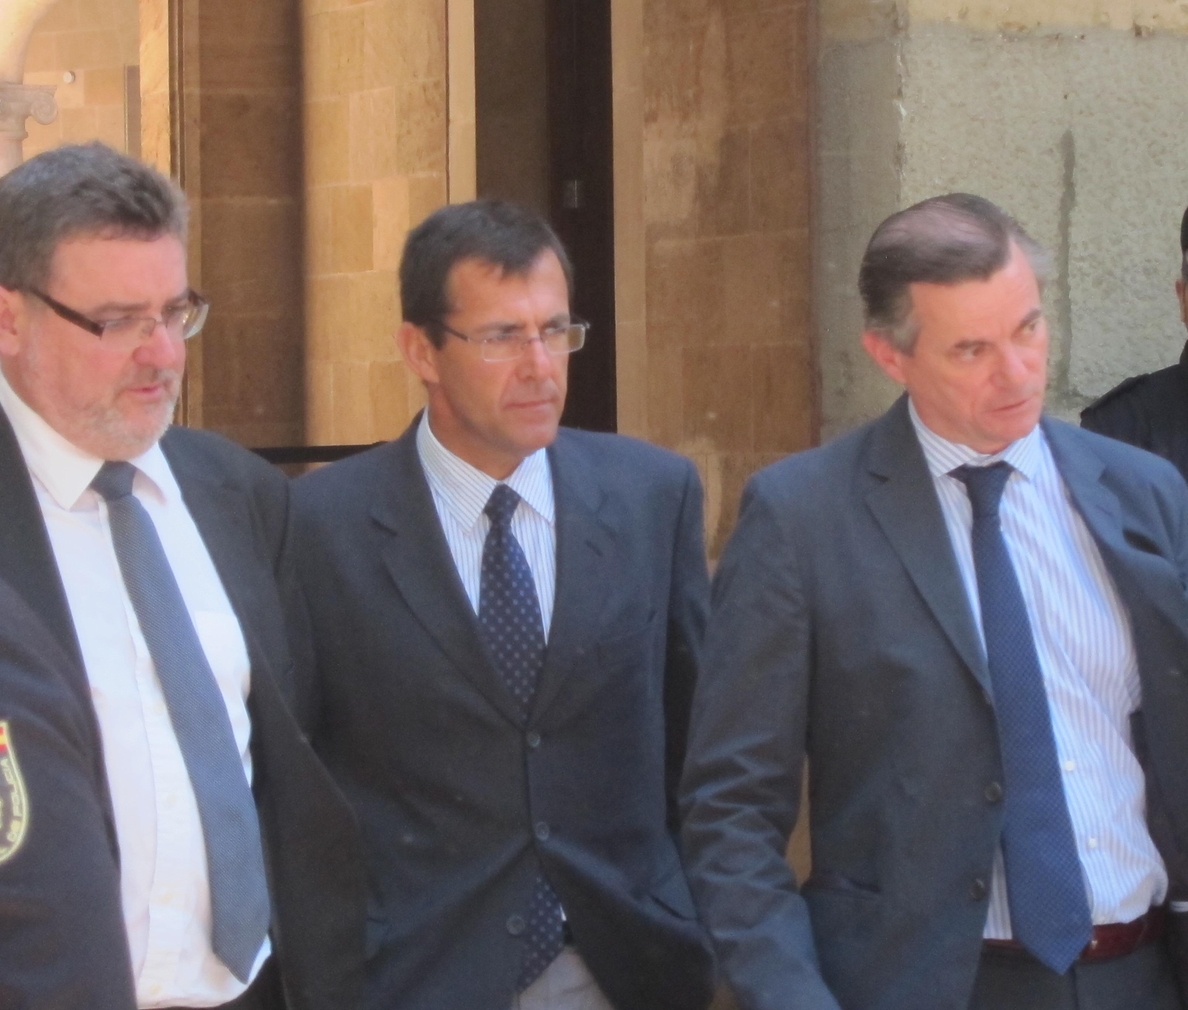 Audiencia de Baleares juzga desde hoy al expresidente de UM Miquel Nadal y otros exaltos cargos por desviar 75.654 euros